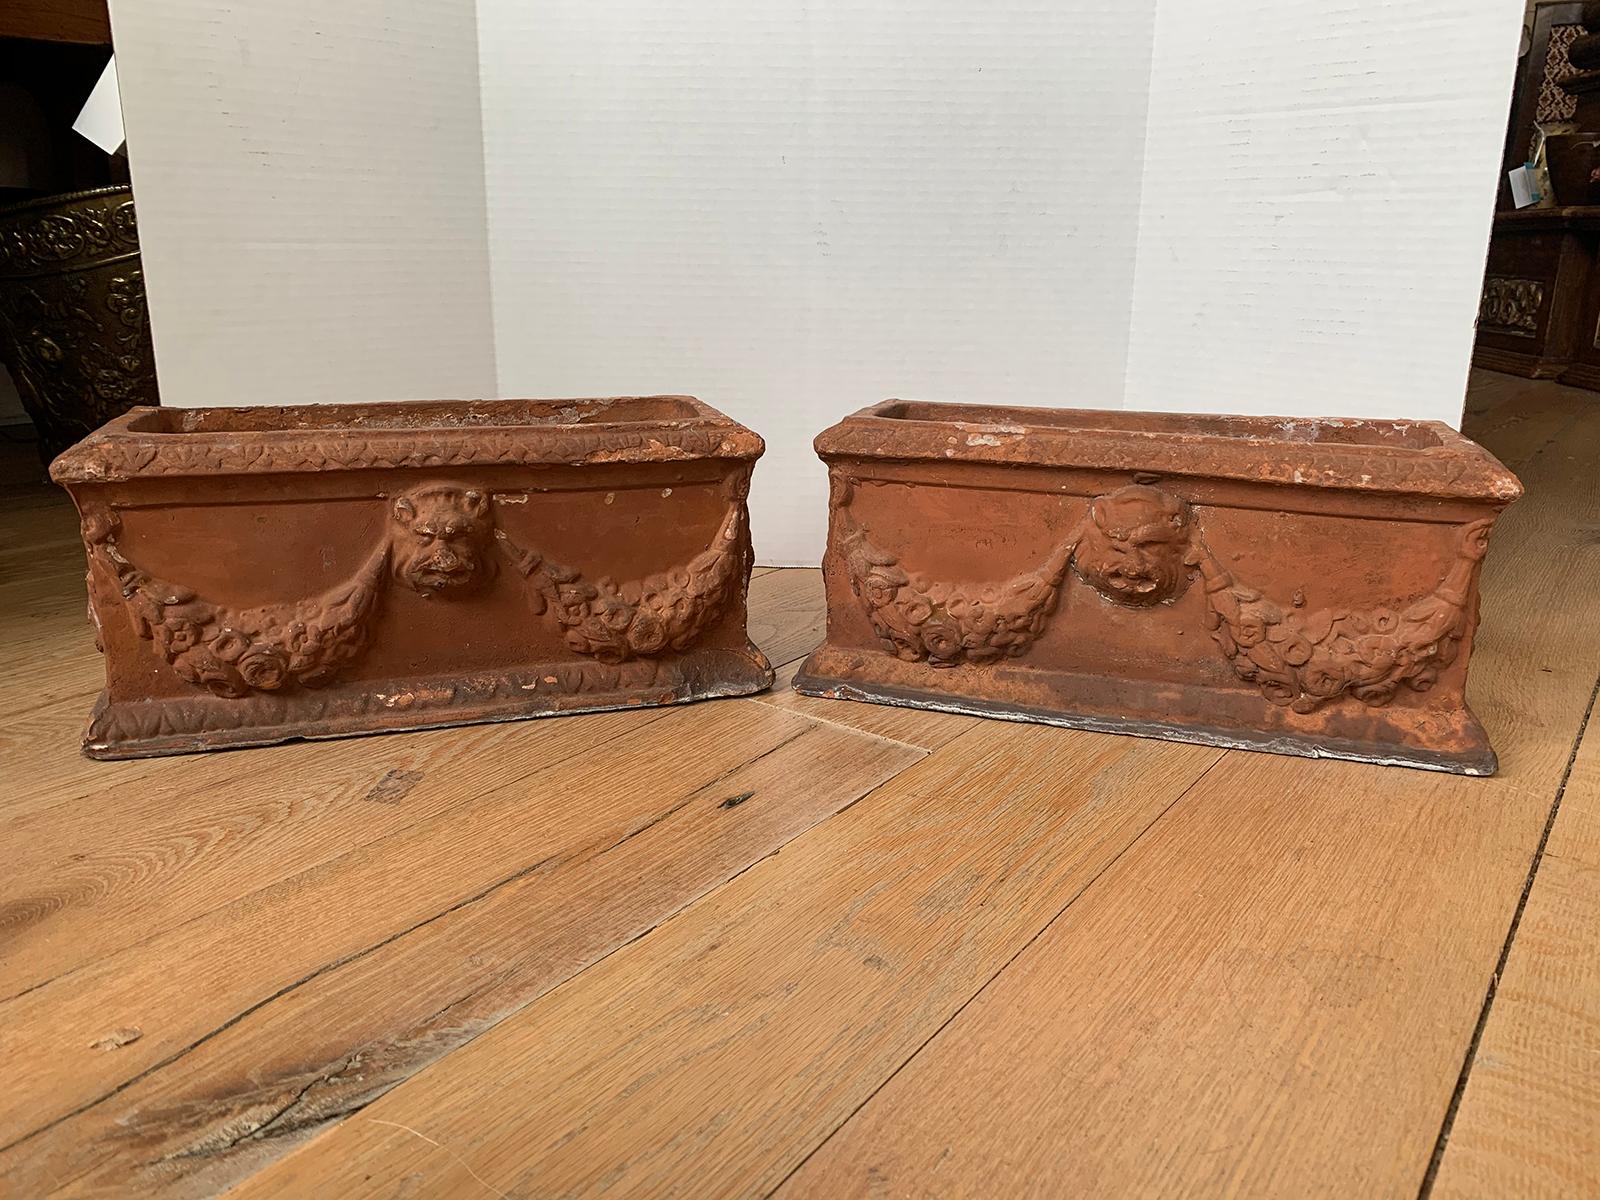 Pair of 19th-20th Century Italian Possibly Impruneta Handmade Terracotta Rectangular Box Planters with Lion Heads and Garland